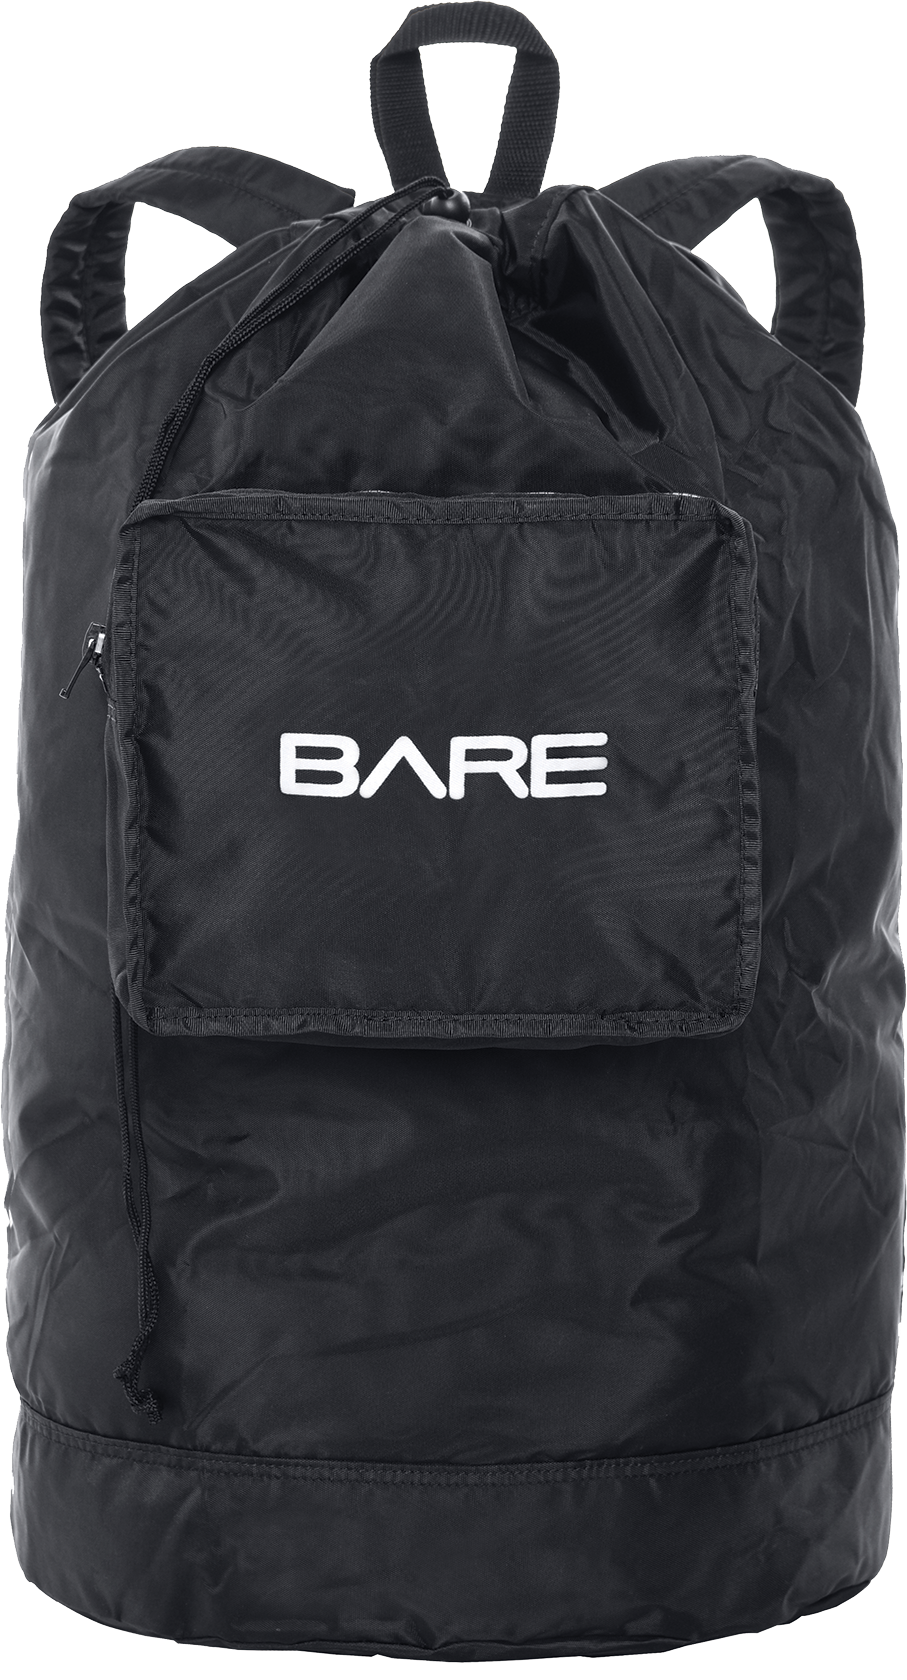 Bare drysuit backpack